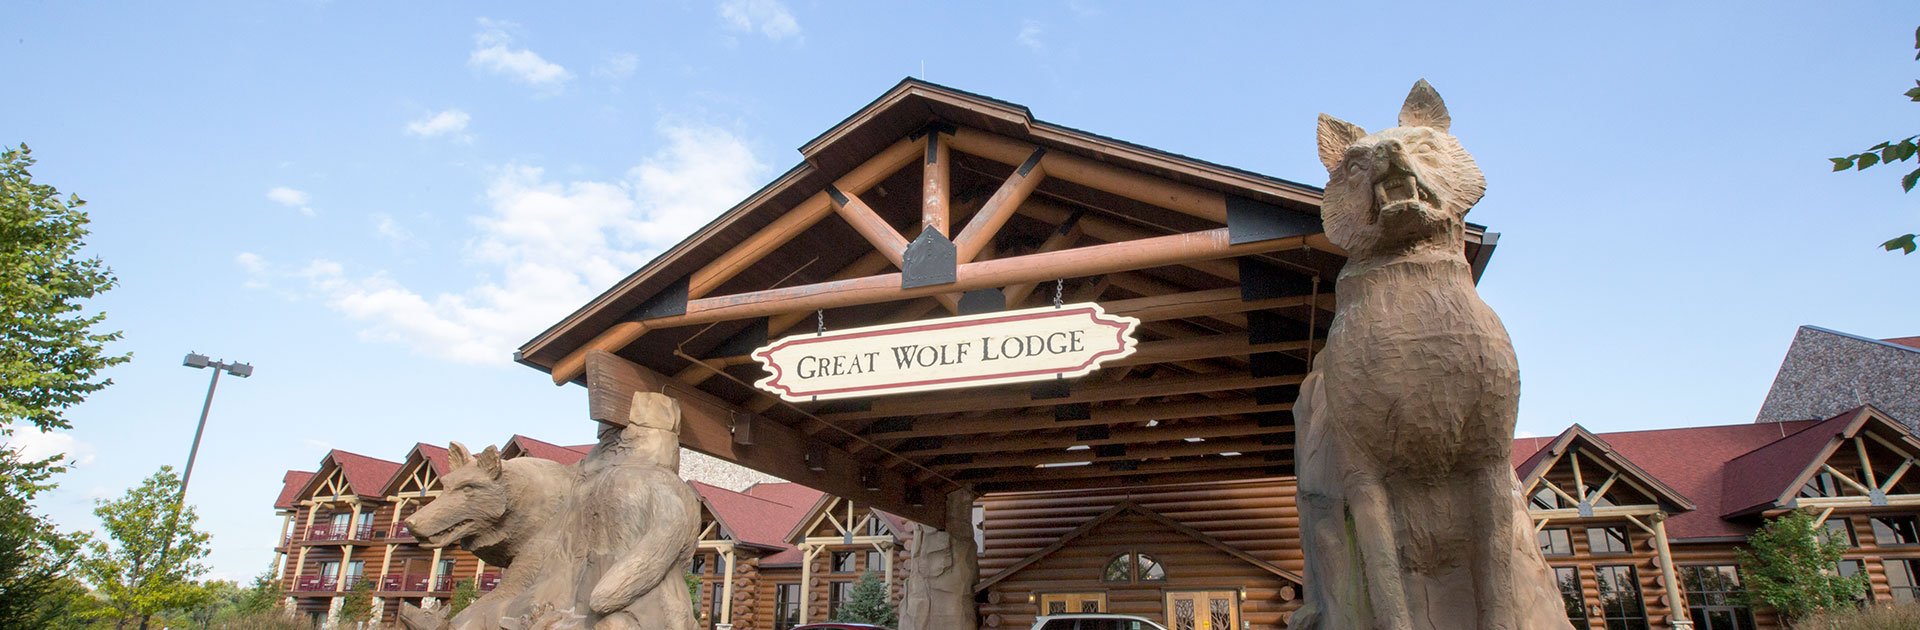 Great Wolf resort Cincinnati / Mason OH